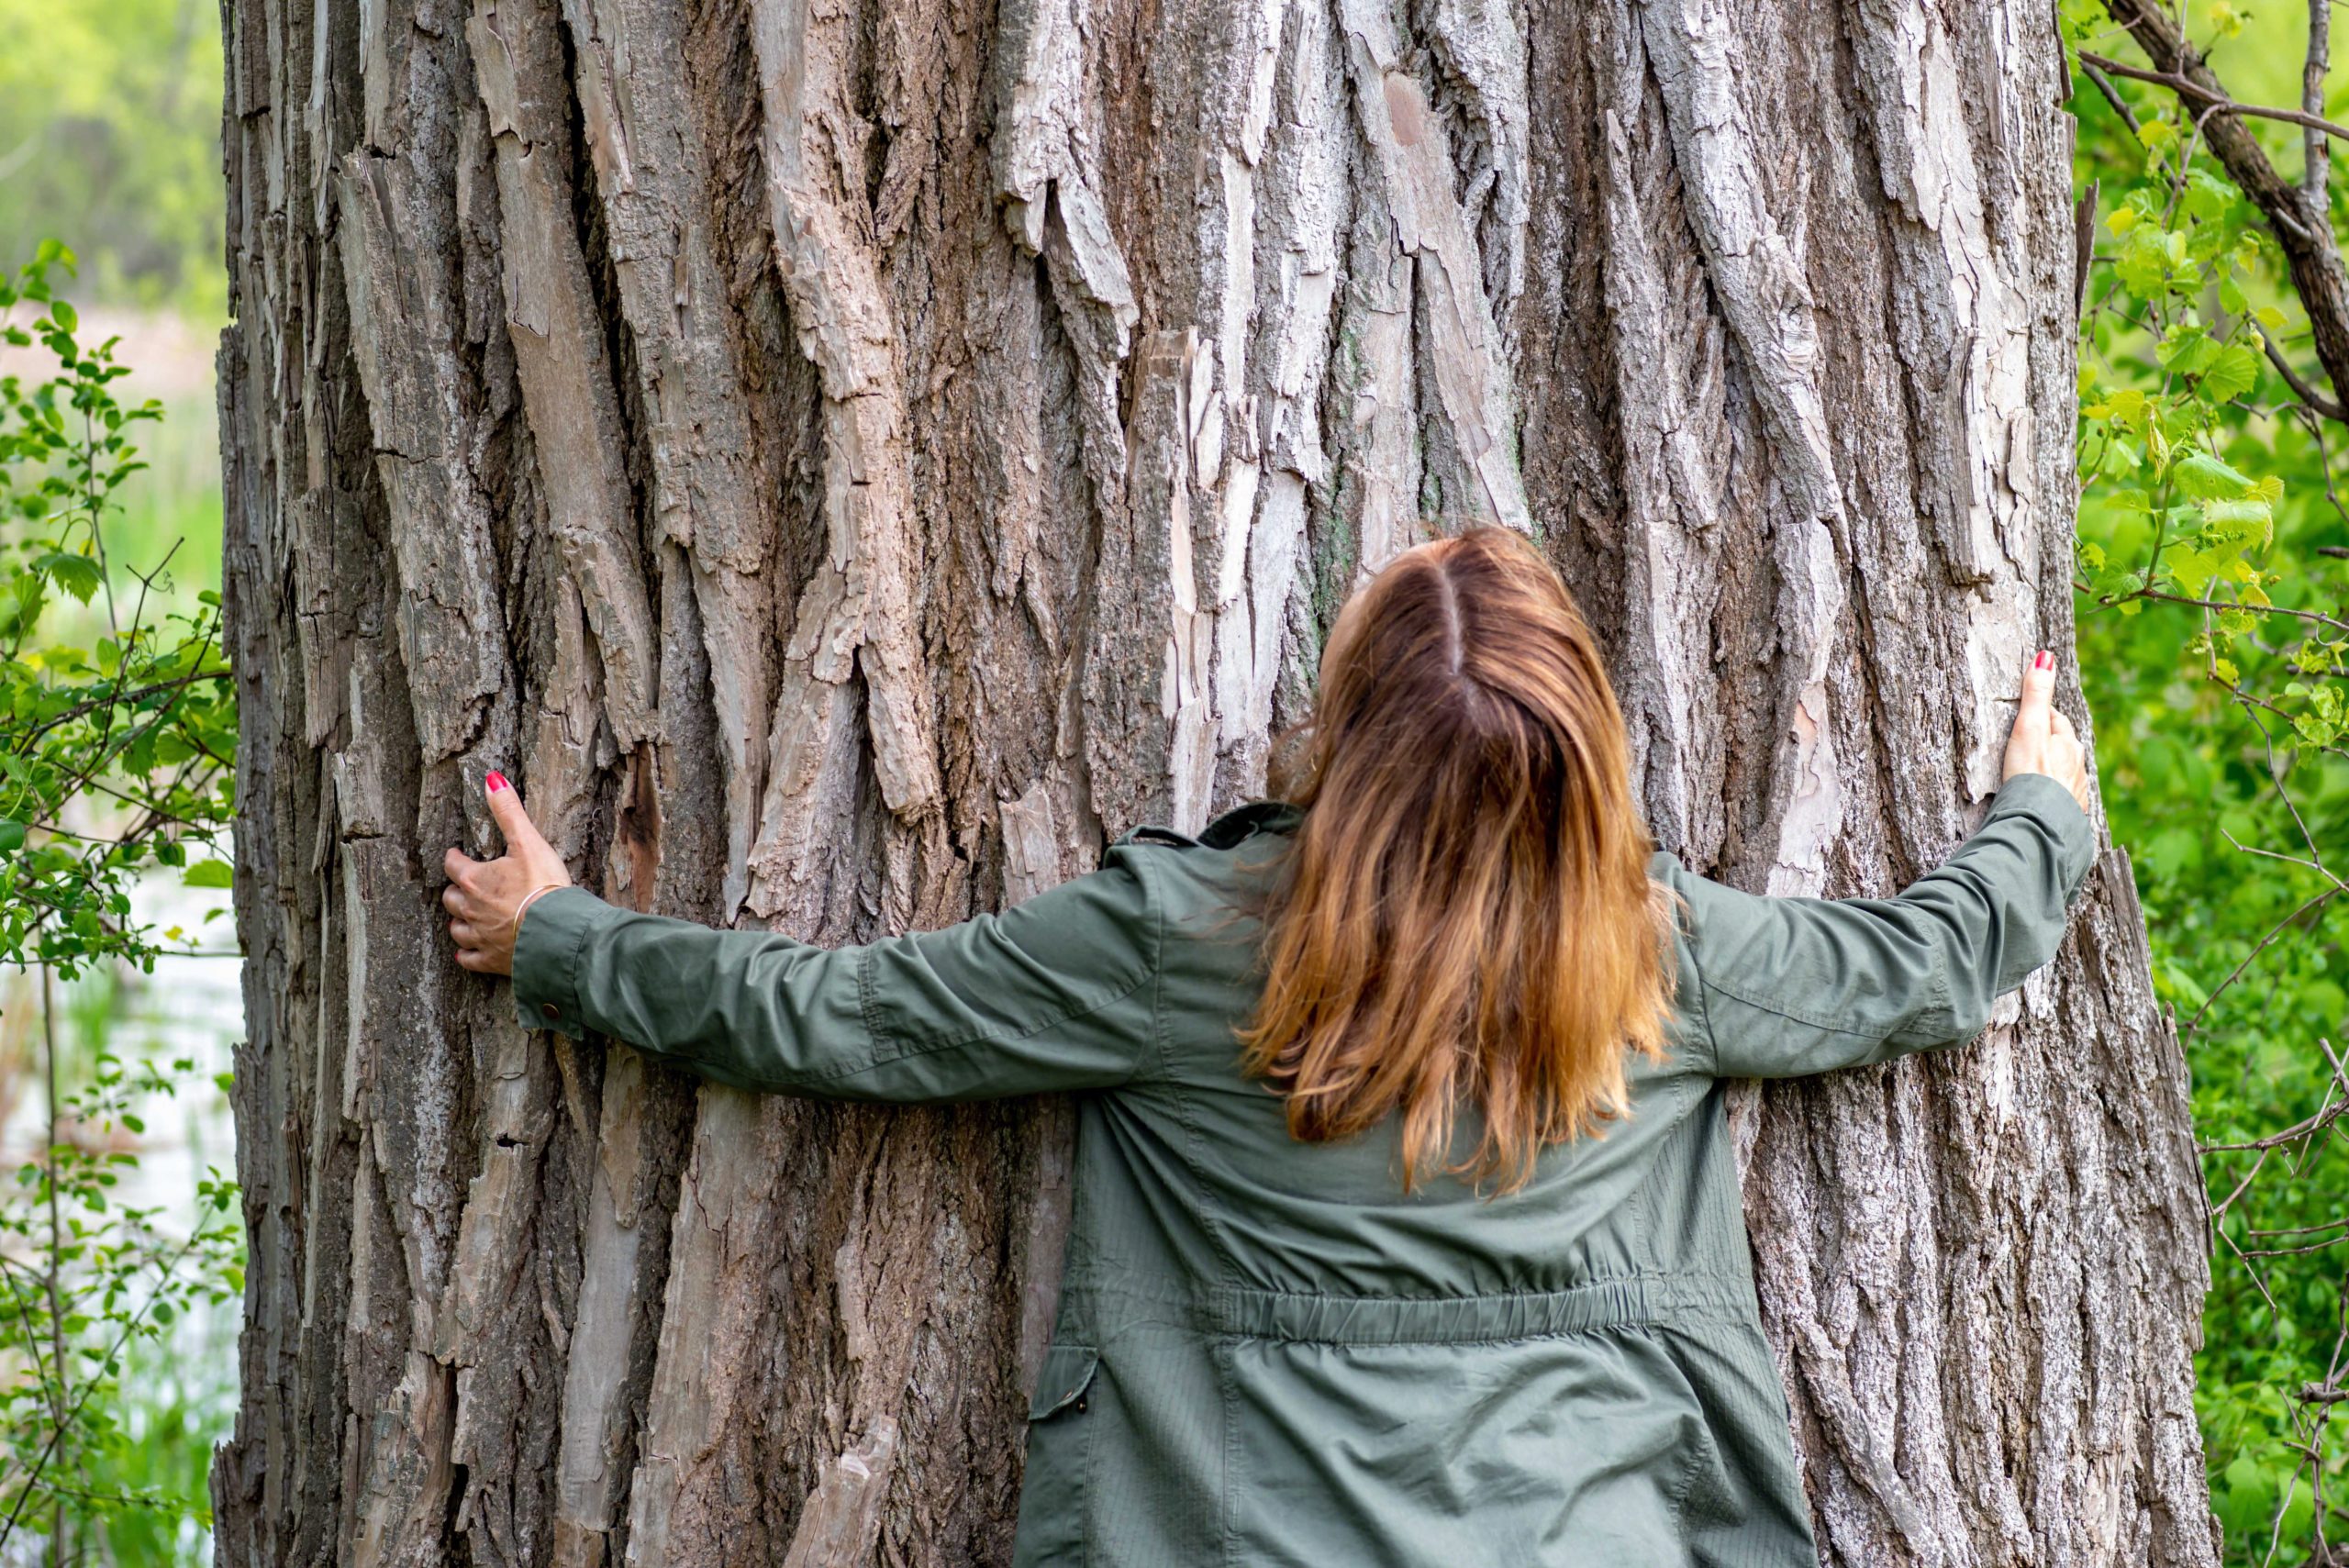 A woman hugs an enormous tree